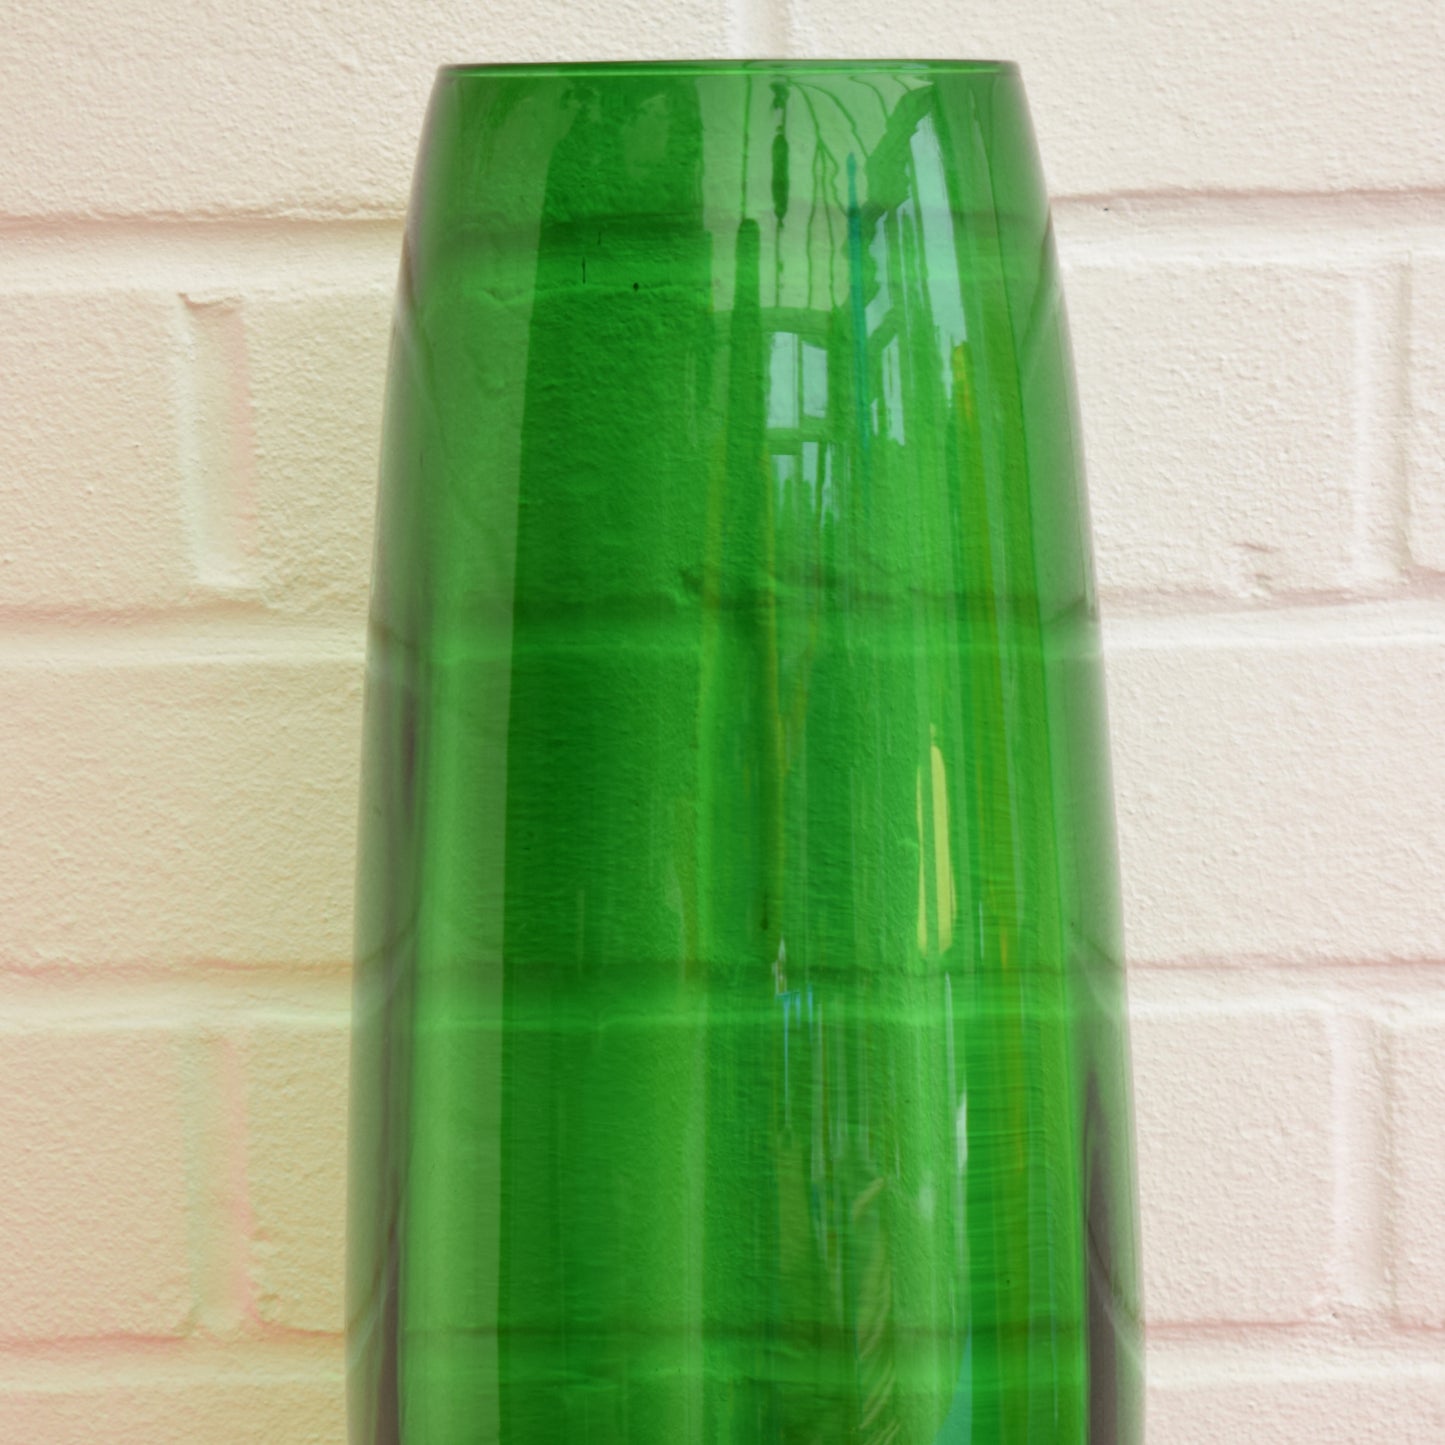 Vintage 1960s Italian Alrose Glass Bullet Vase - Emerald Green